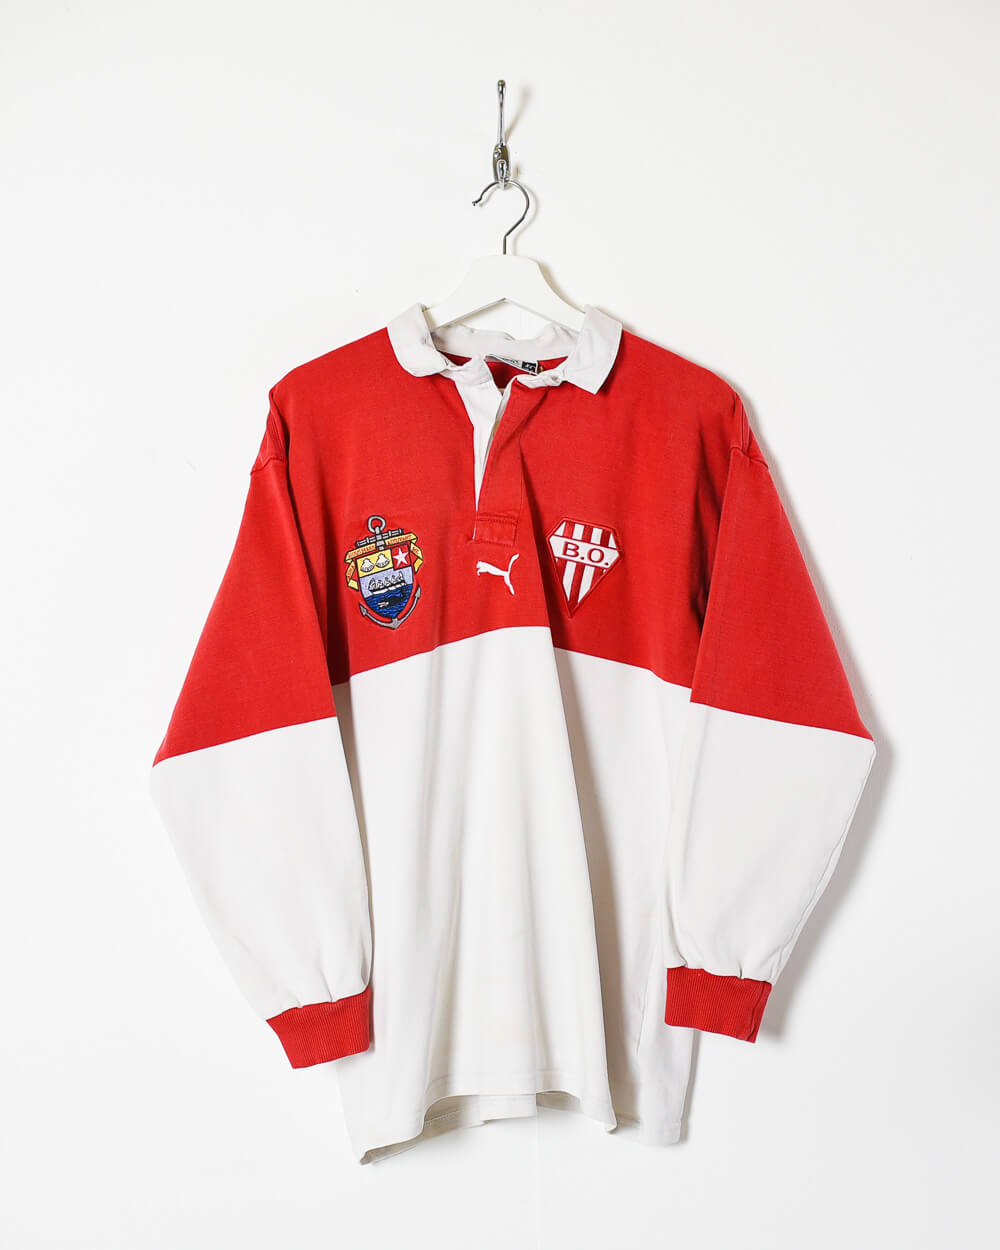 Red Puma B.O Rugby Shirt - Large